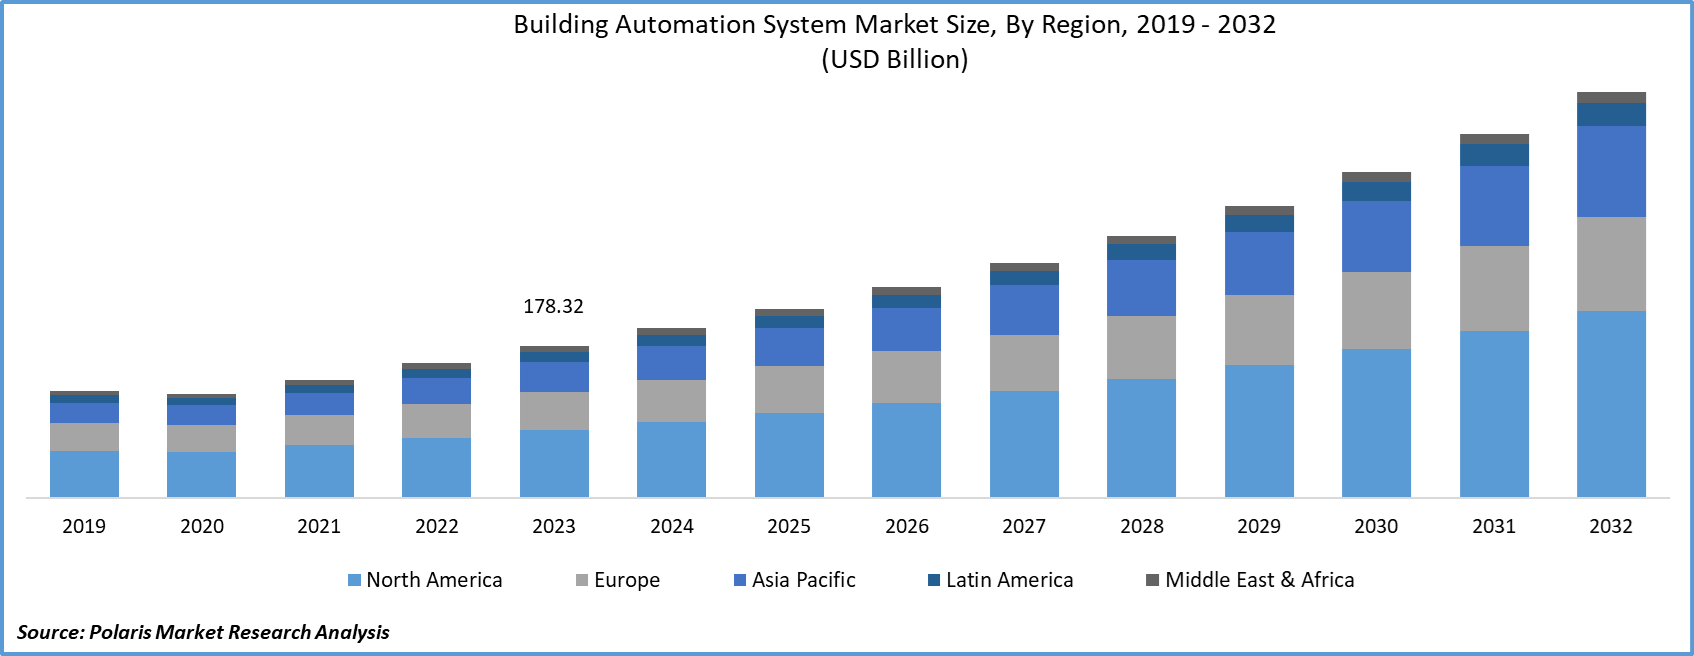 Building Automation System Market Size